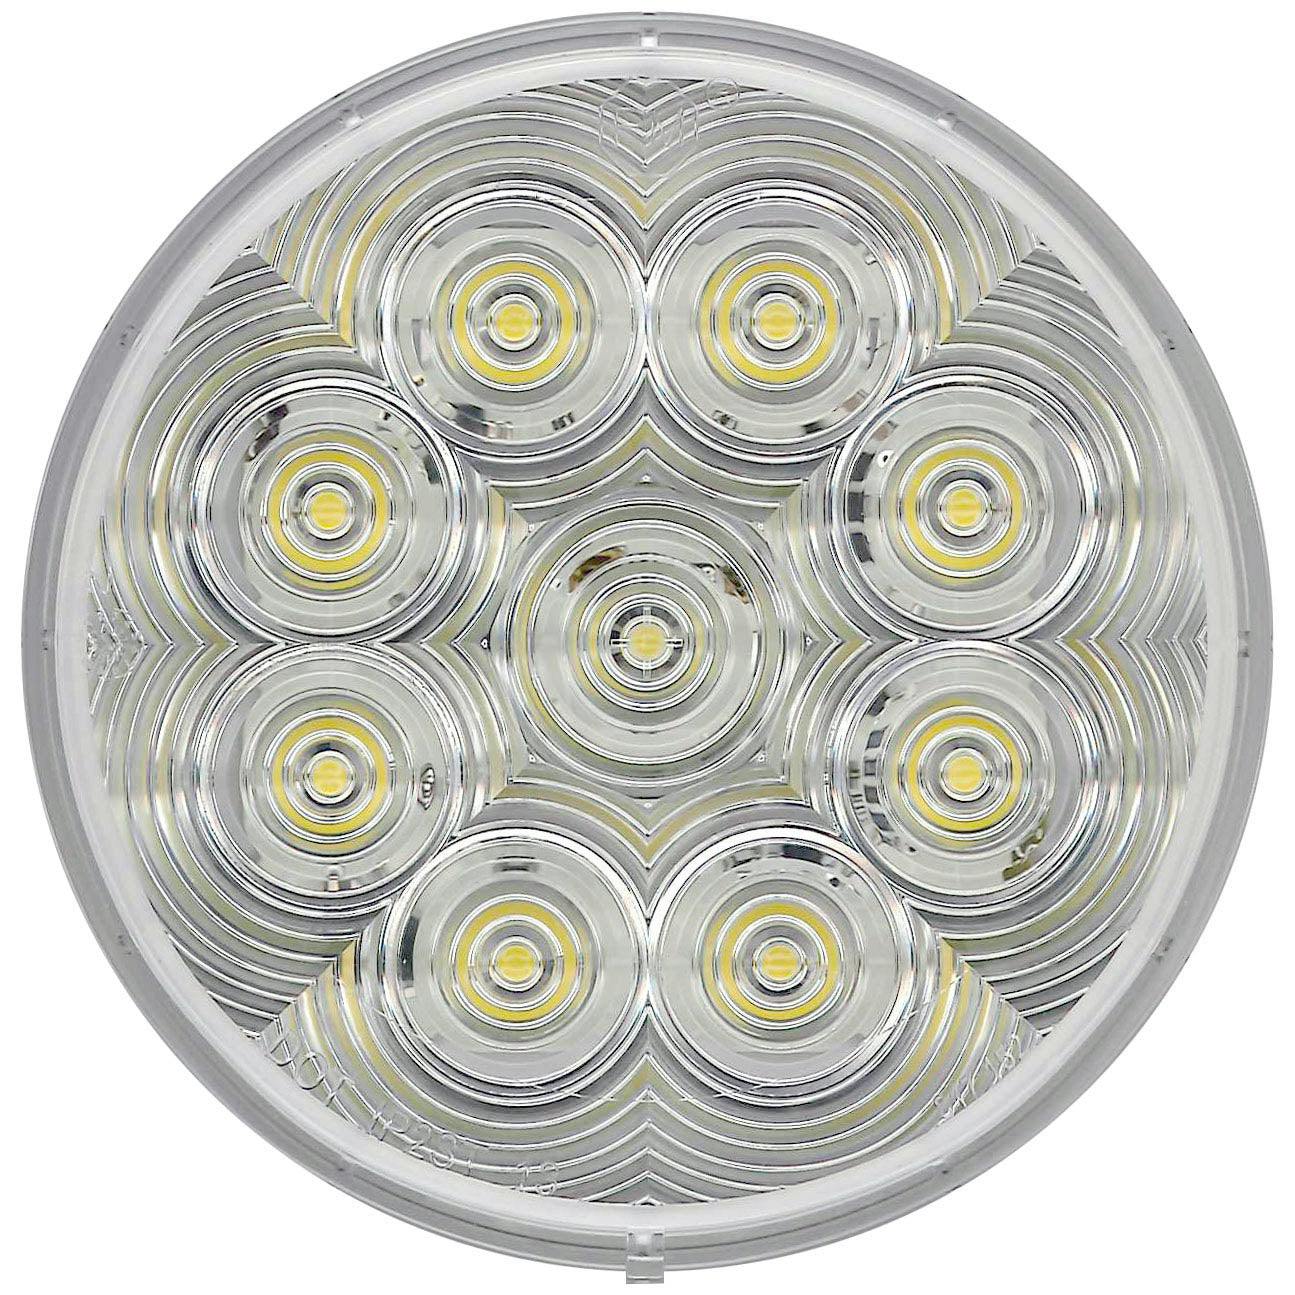 LED Back-Up Light, Round, AMP, Grommet-Mount, 4", Multi-volt, white, bulk pack (Pack of 50) - 817C-9_bf892462-03d8-46e3-8f20-f999f4a7acae